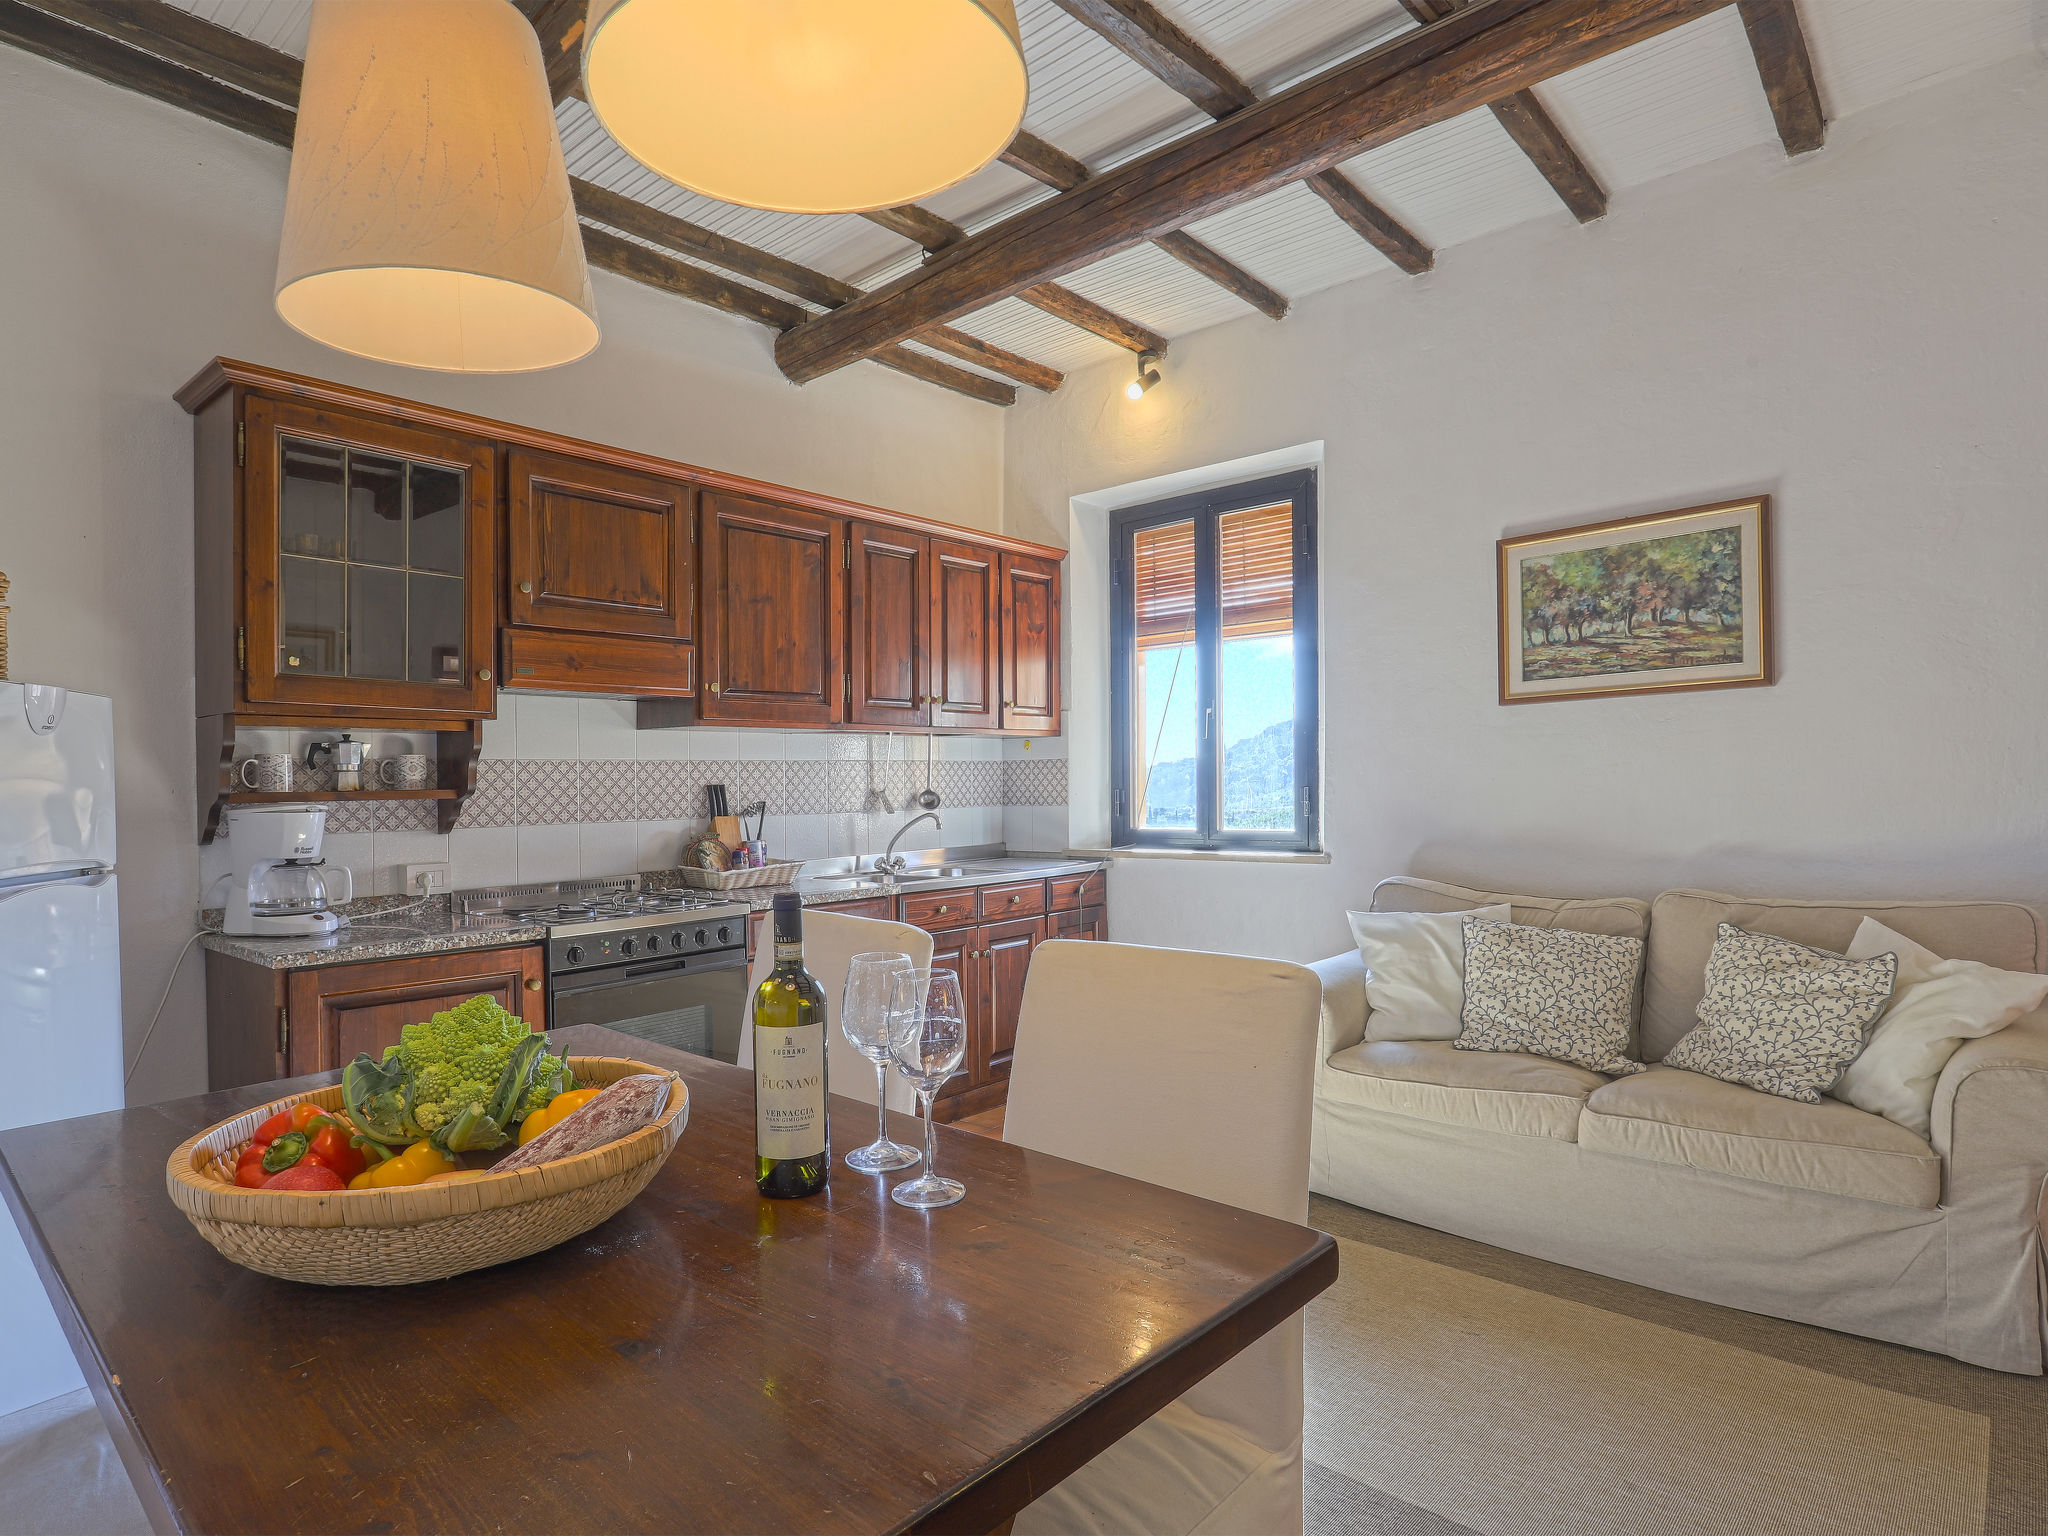 Foto 5 - Appartamento con 1 camera da letto a San Gimignano con piscina e giardino